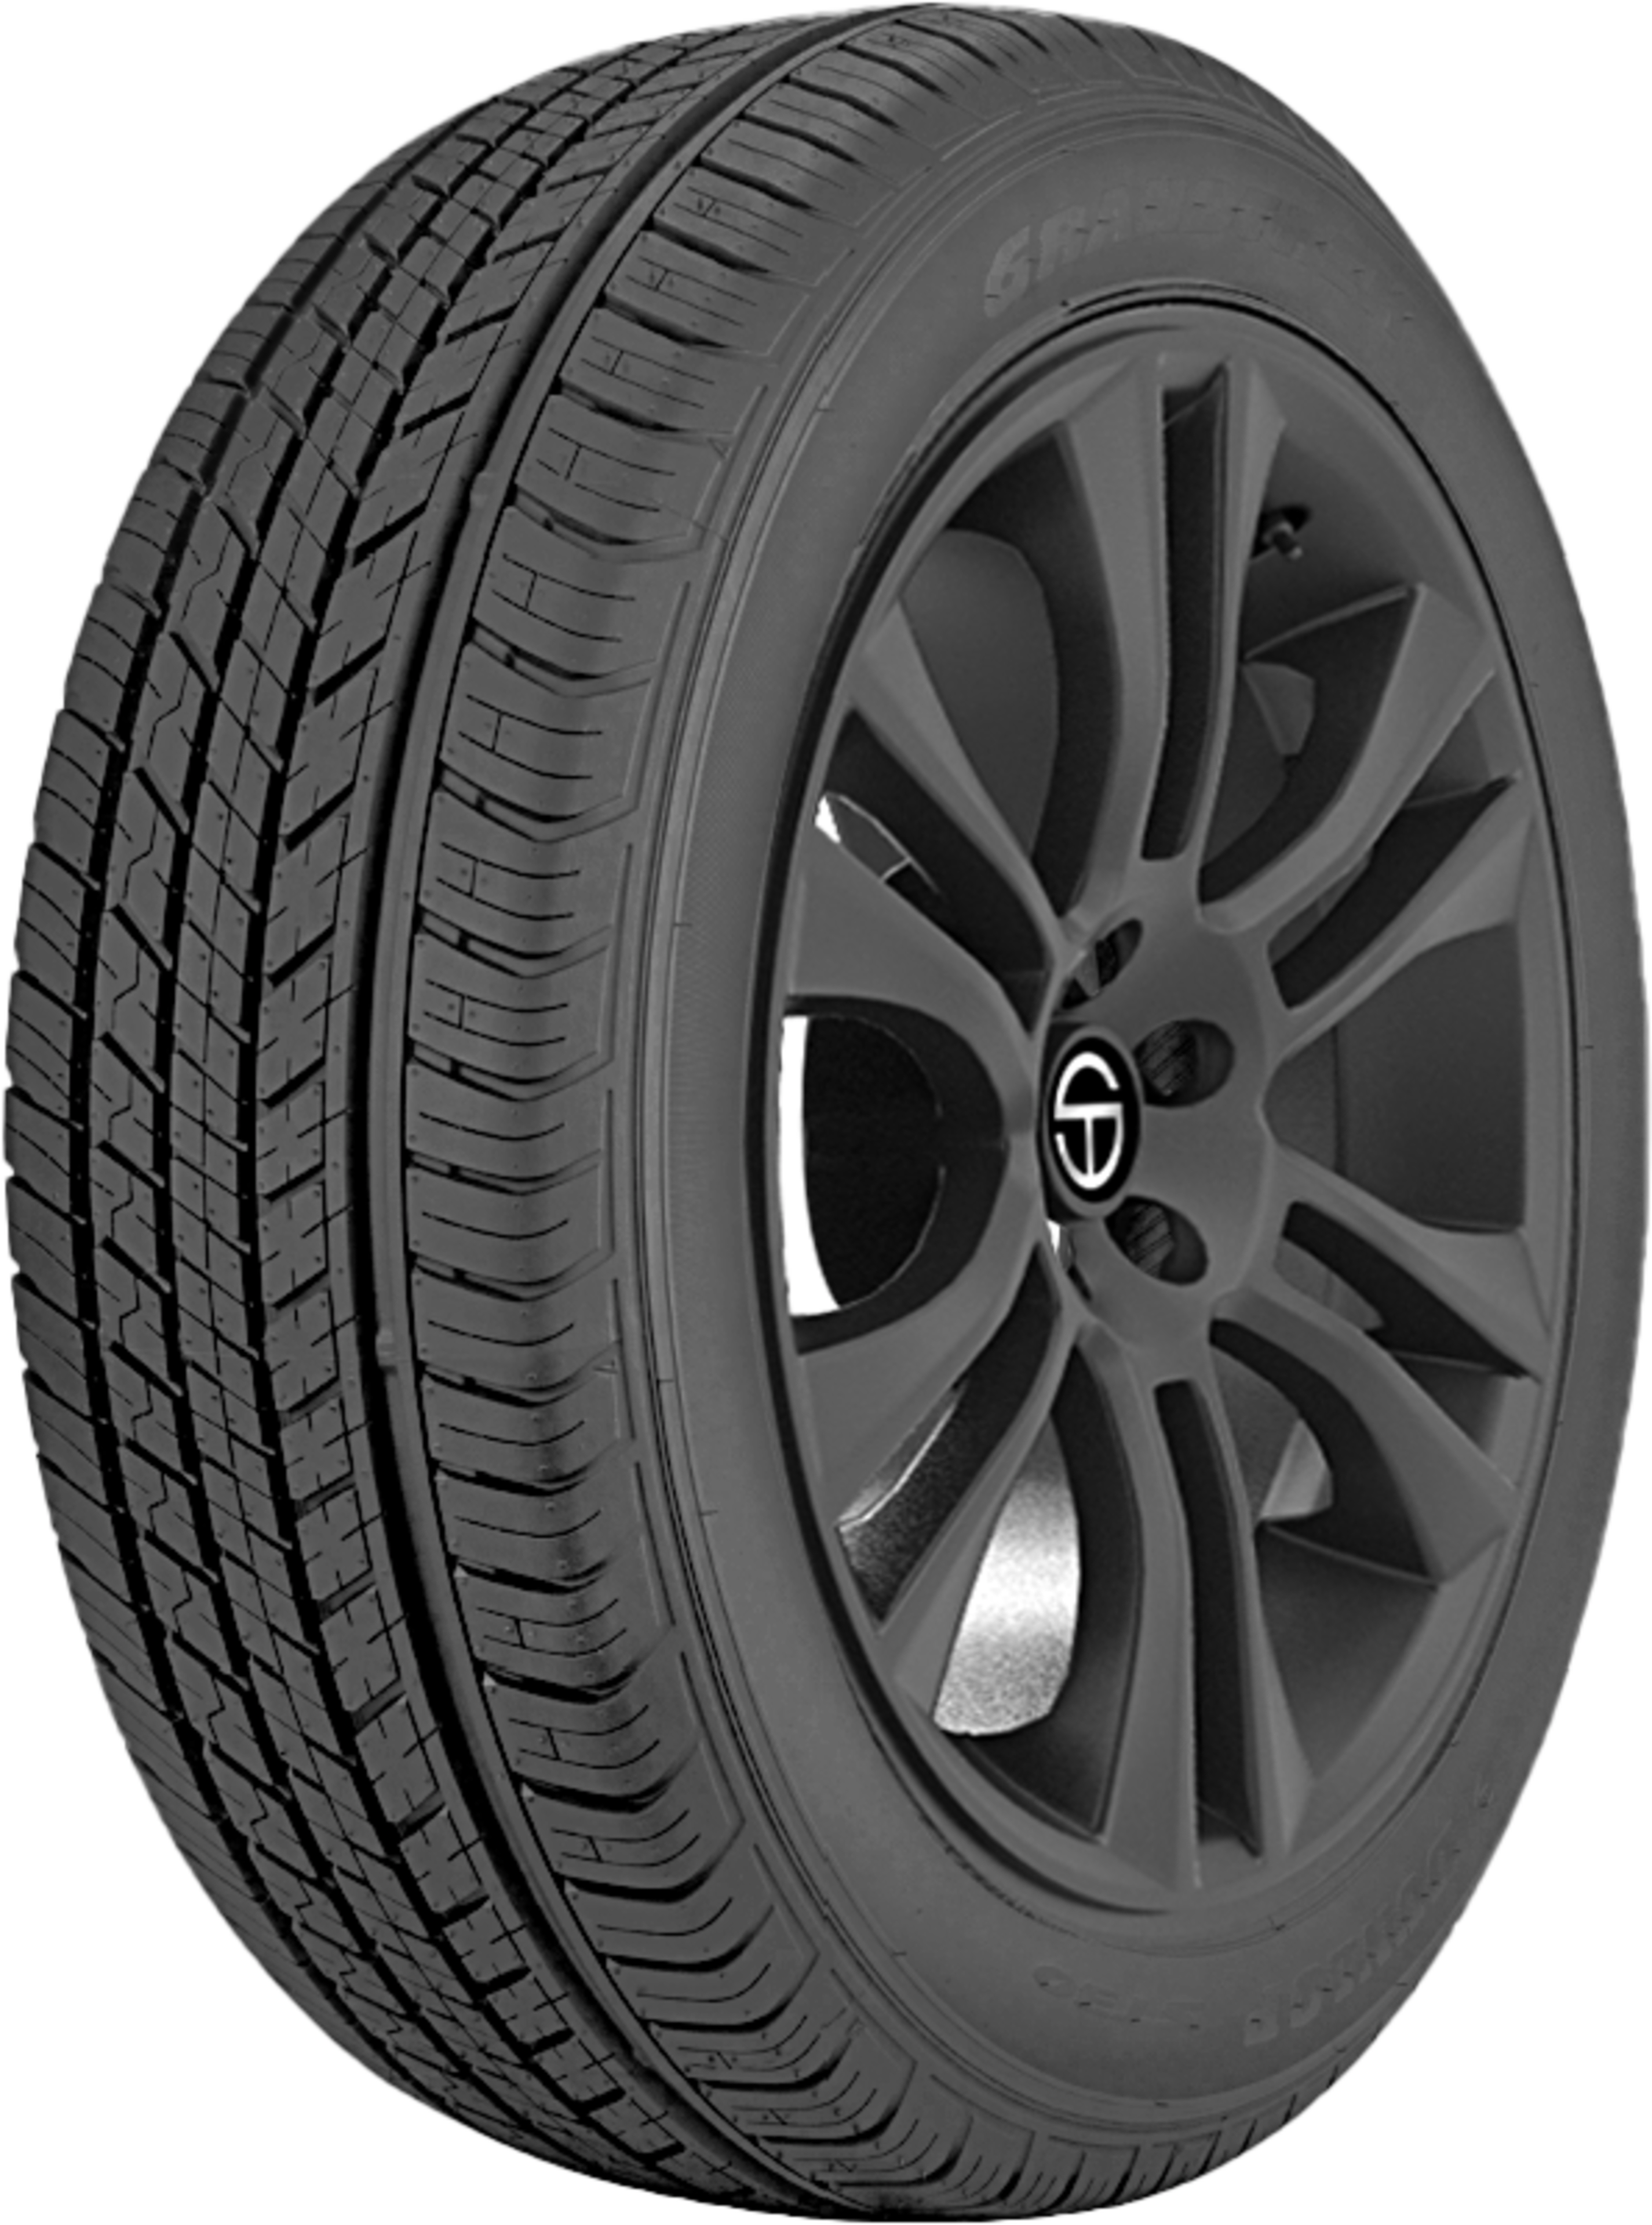 Dunlop Grandtrek AT20 Tire Reviews (41 Reviews)